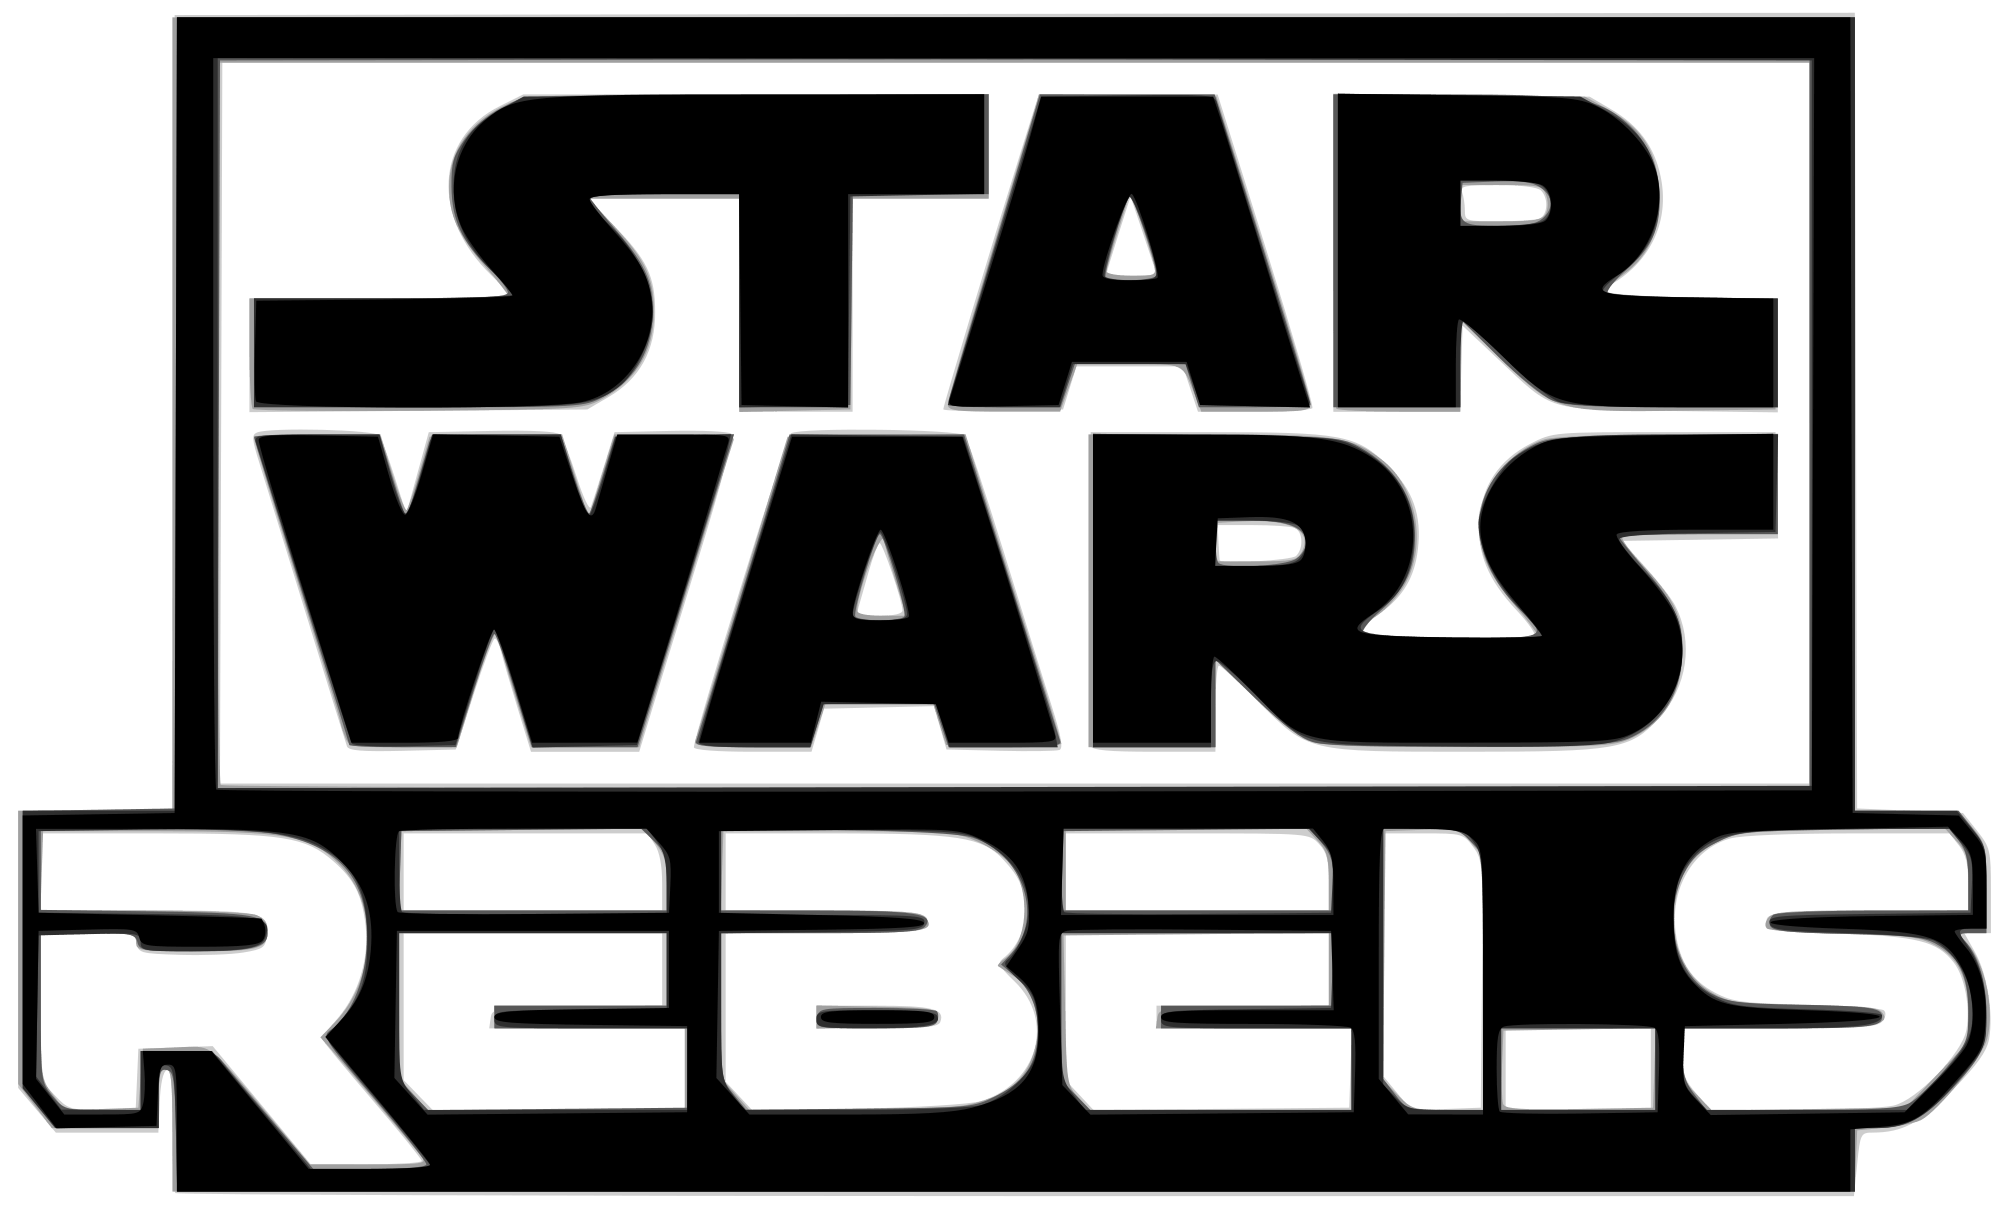 Black White Rebels Logo - File:Logo Star Wars Rebels schwarz.svg - Wikimedia Commons